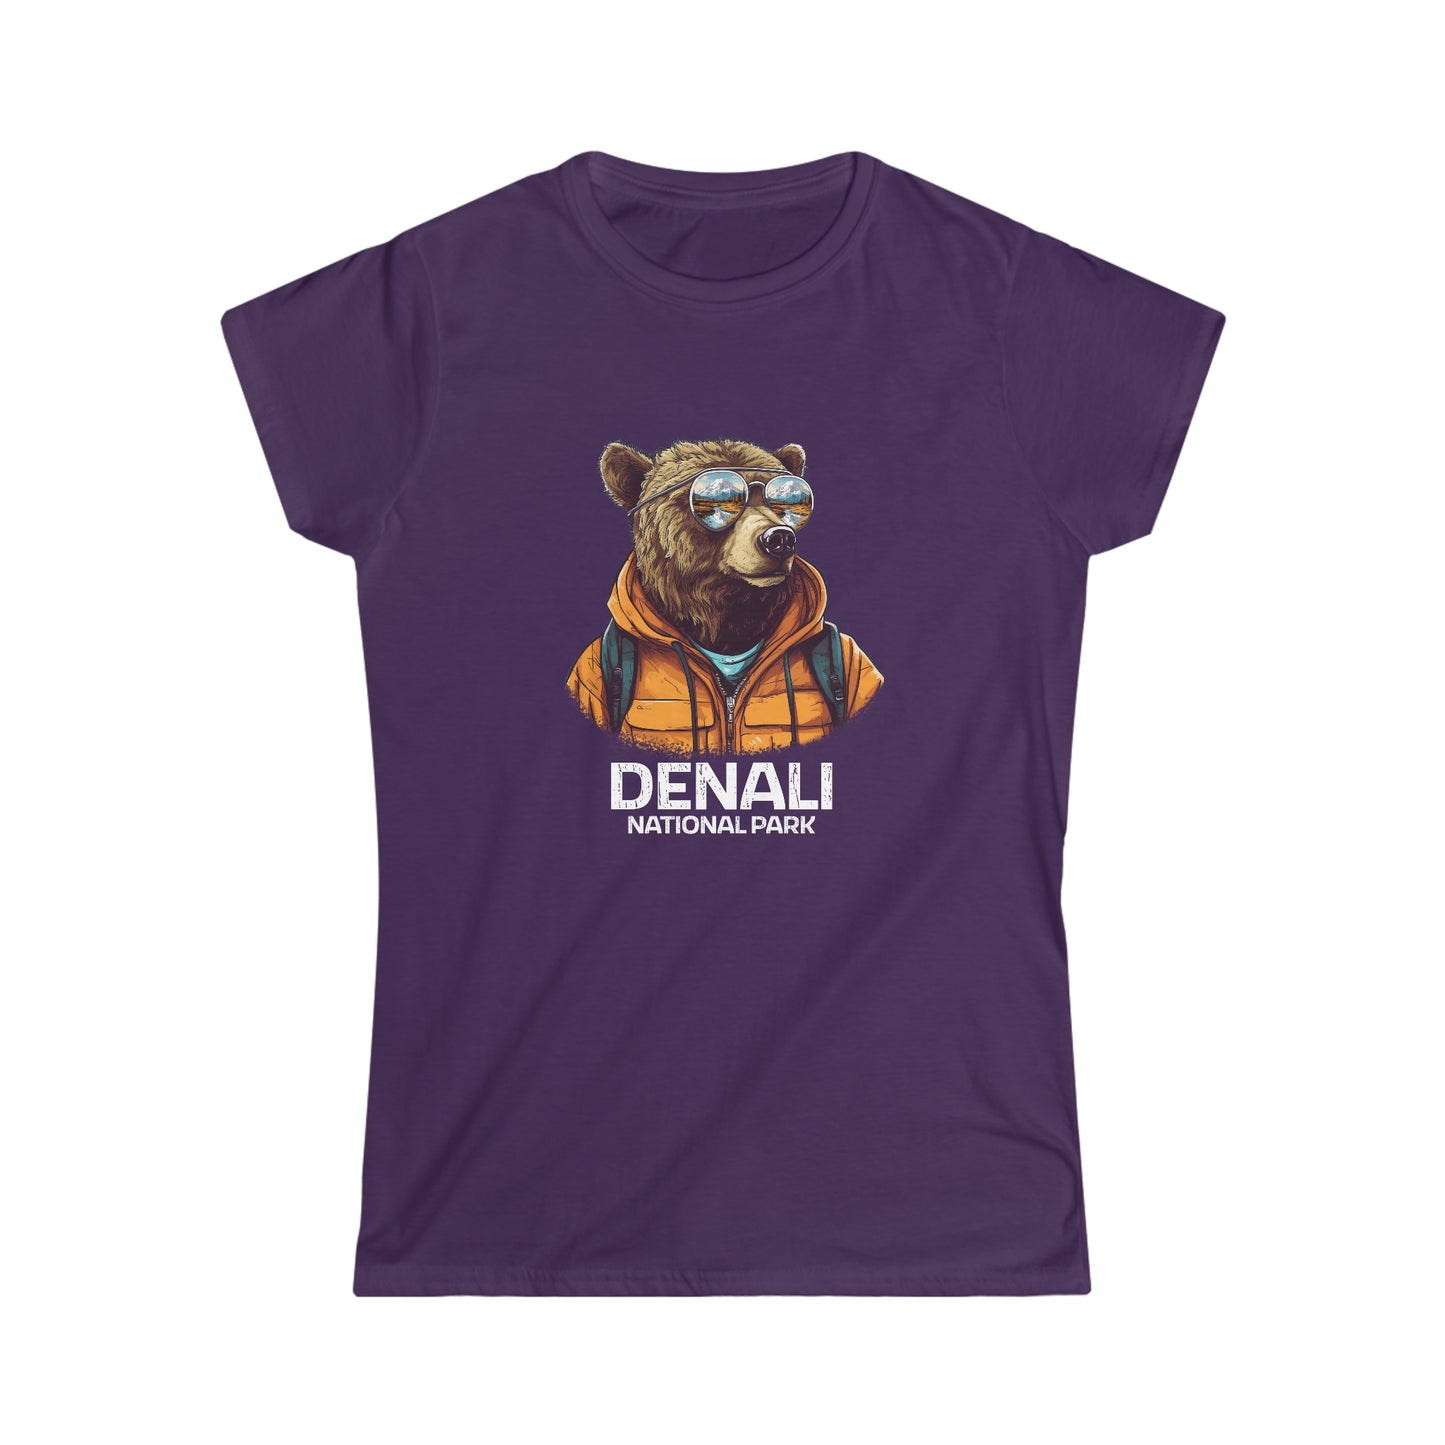 Denali National Park Women's T-Shirt - Cool Grizzly Bear